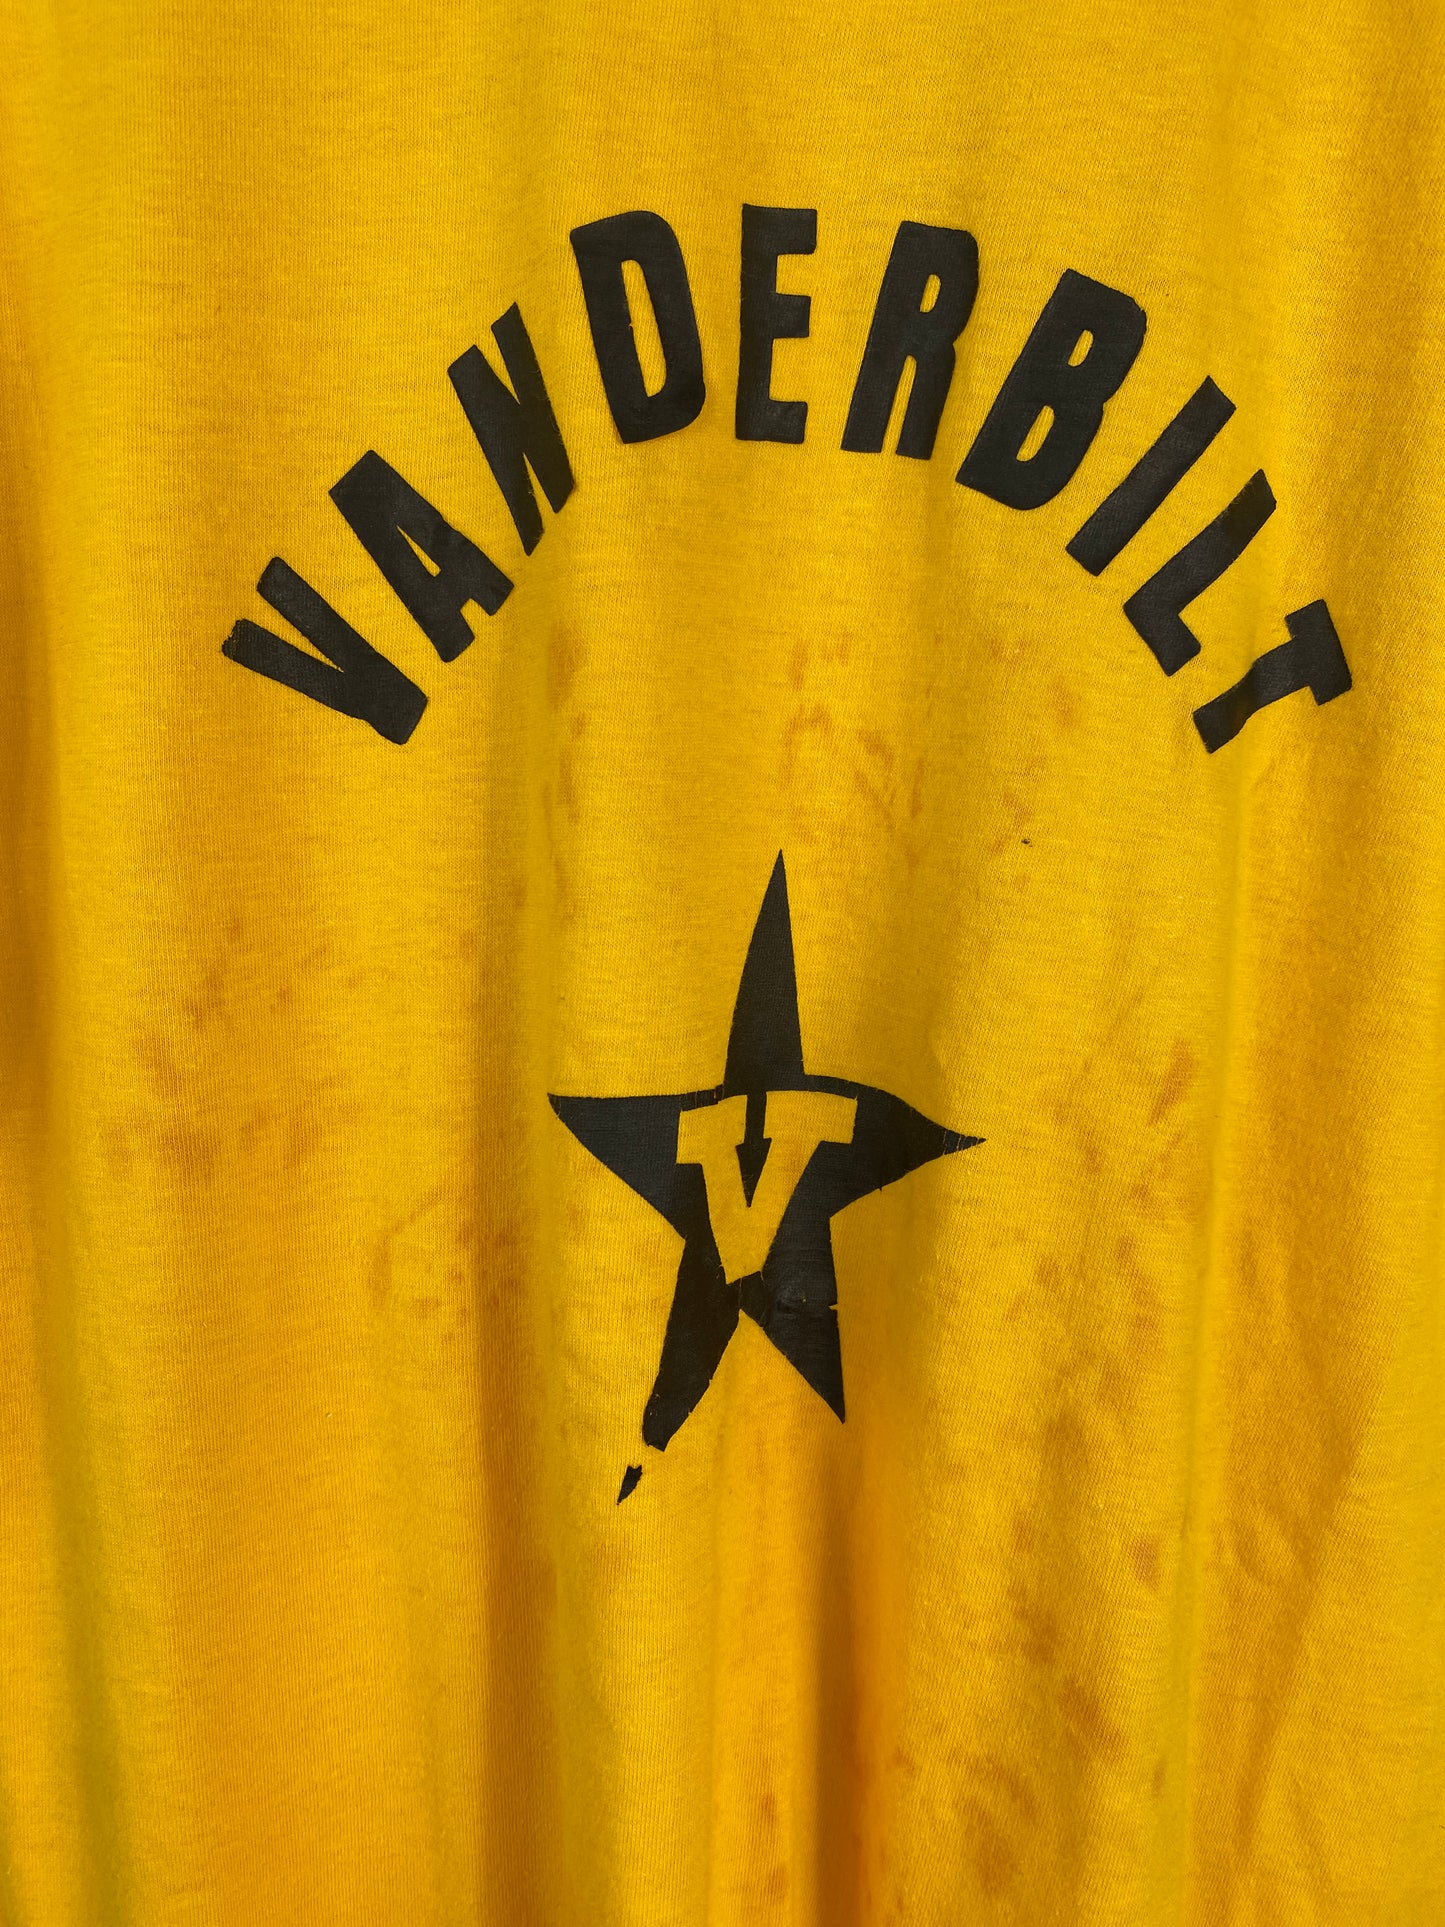 VTG Vanderbilt Ringer Tee Sz L